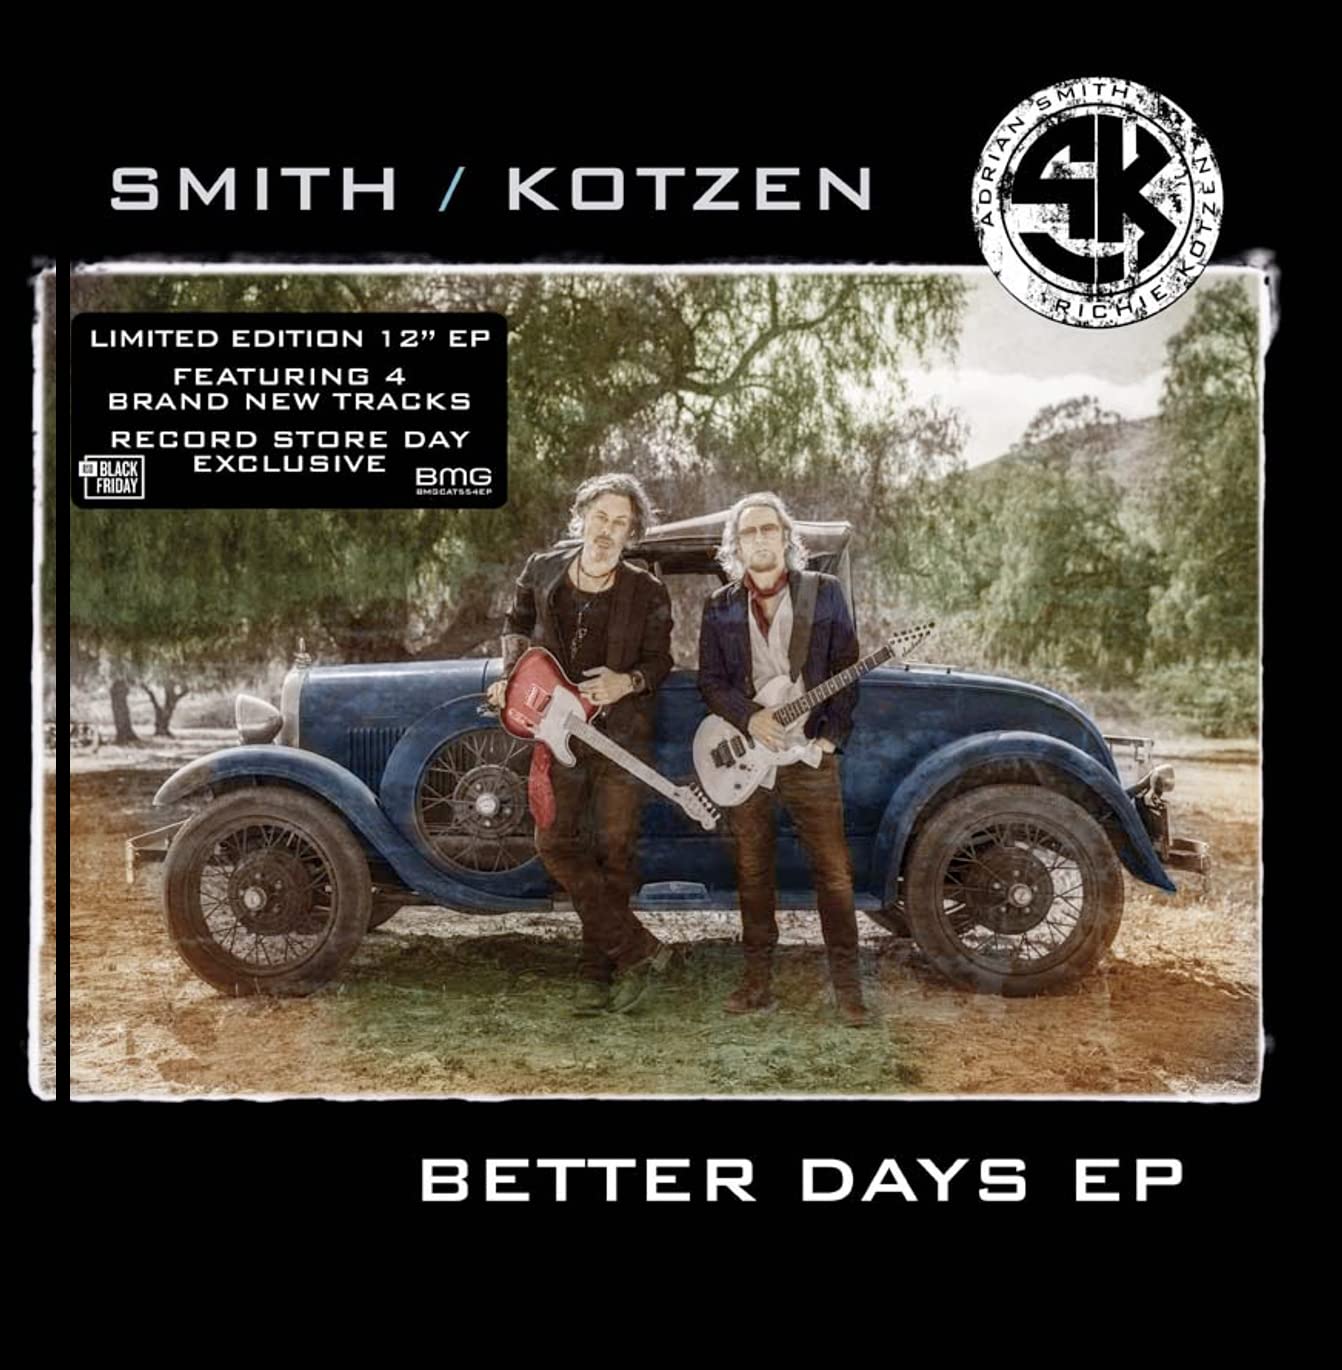 ADRIAN SMITH & RICHIE KOTZEN - BETTER DAYS EP [RSD BLACK FRIDAY] (VINYL 12") only 2500 worldwide! 